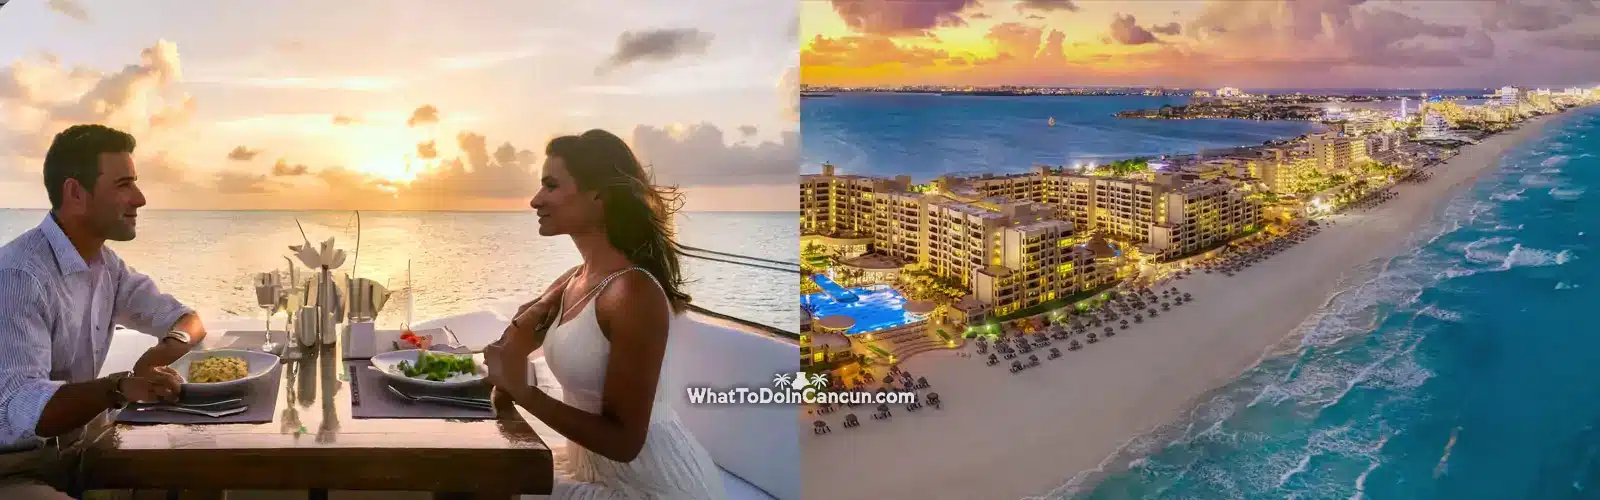 romantic-dinner-cancun-proposal-yacht-charter